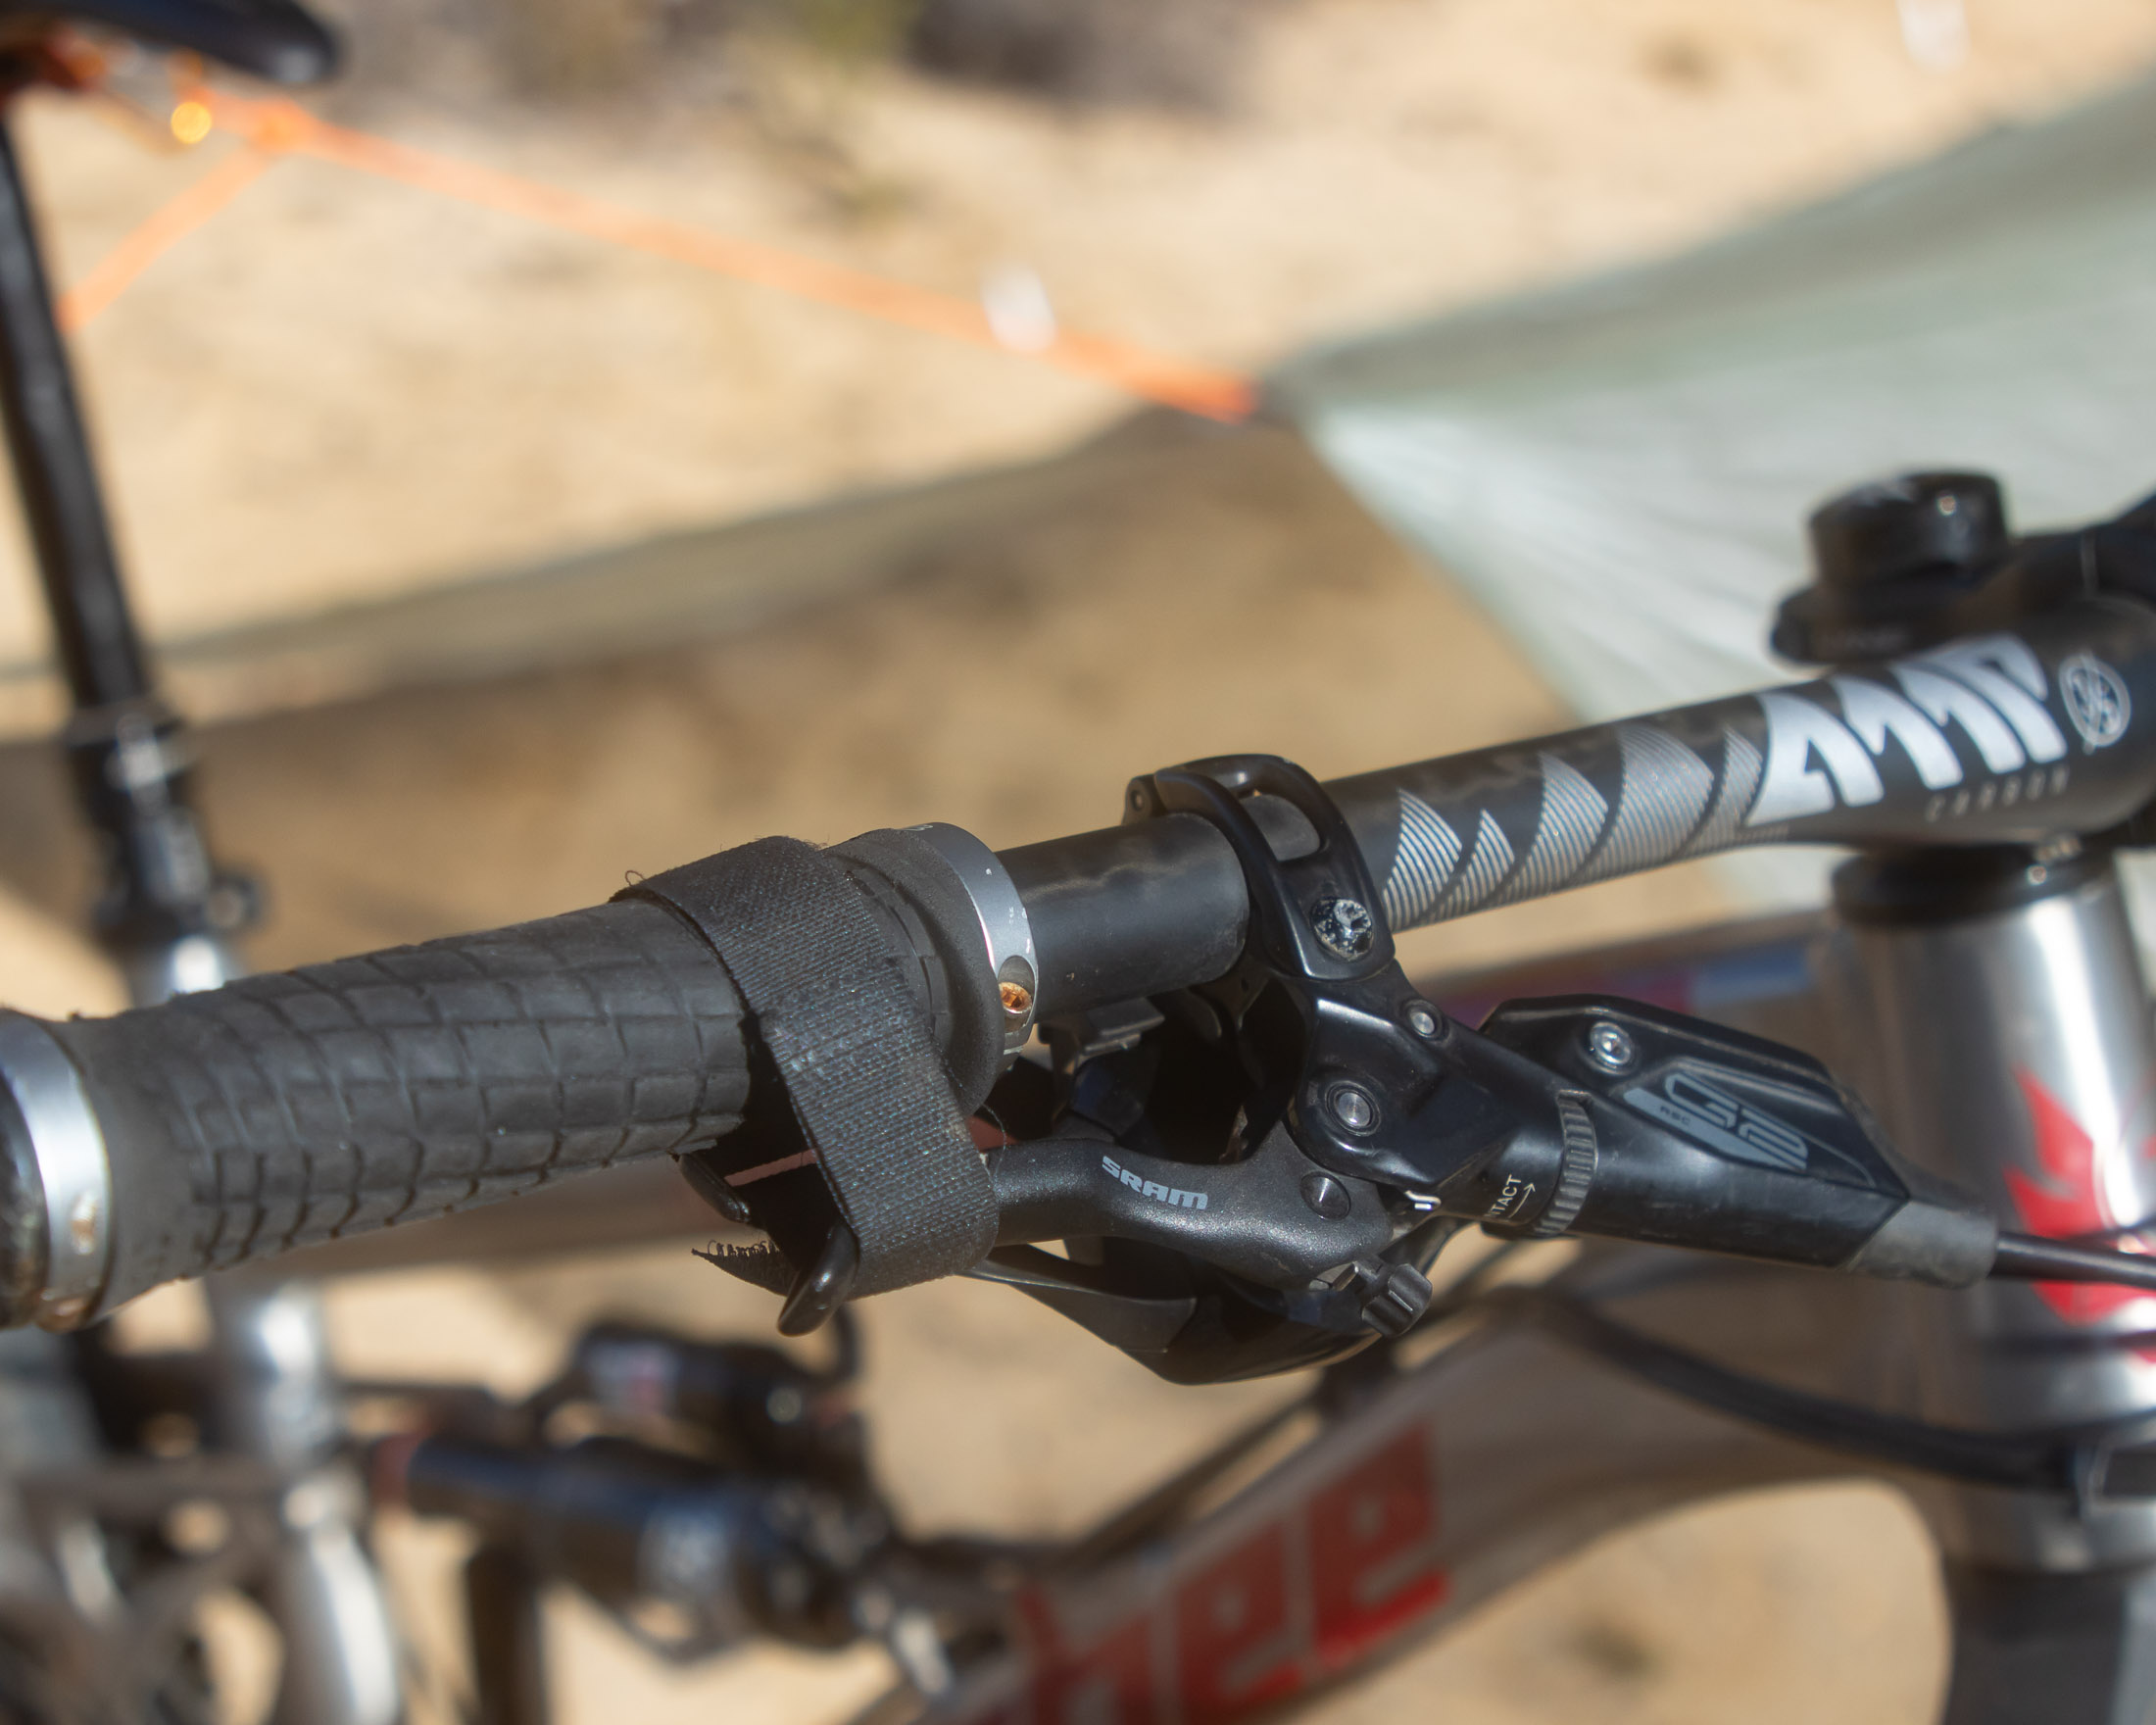 bike brake lever held with strap